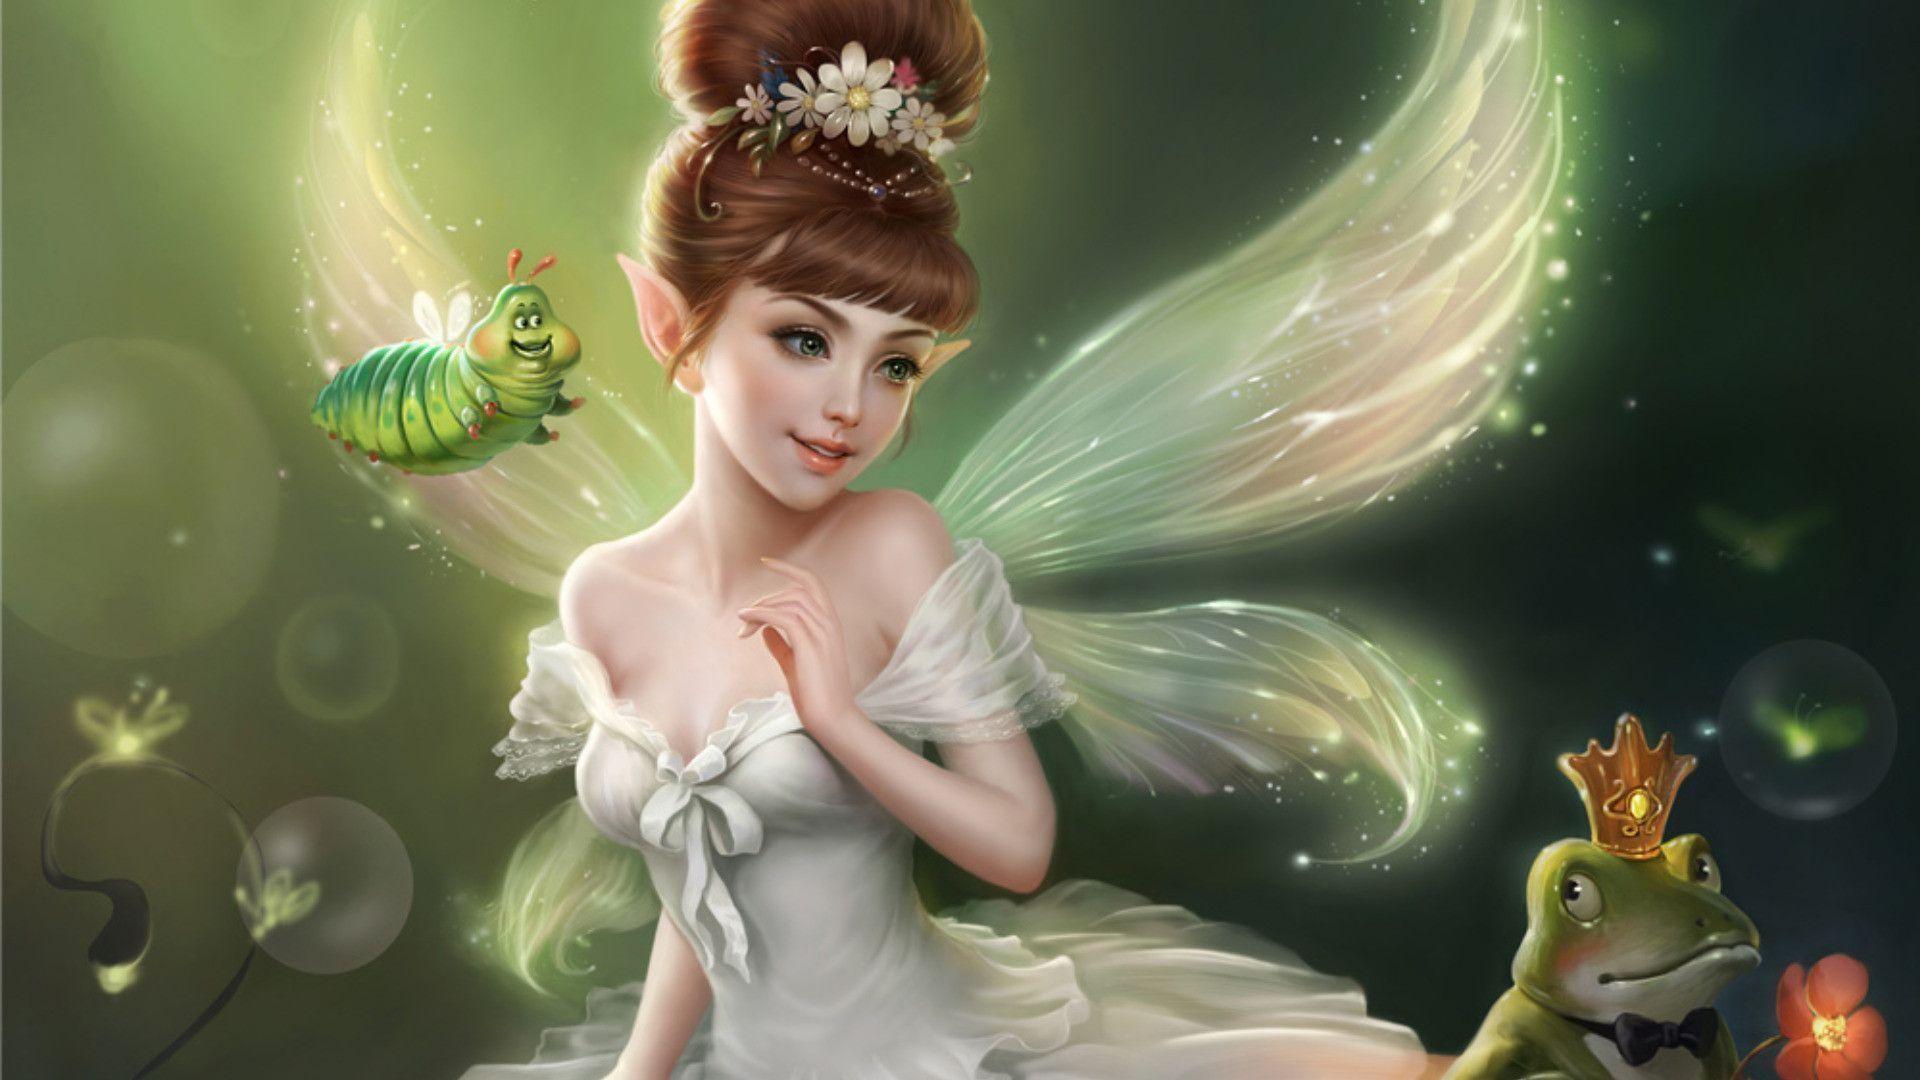 Beautiful Fairies Wallpaper Image